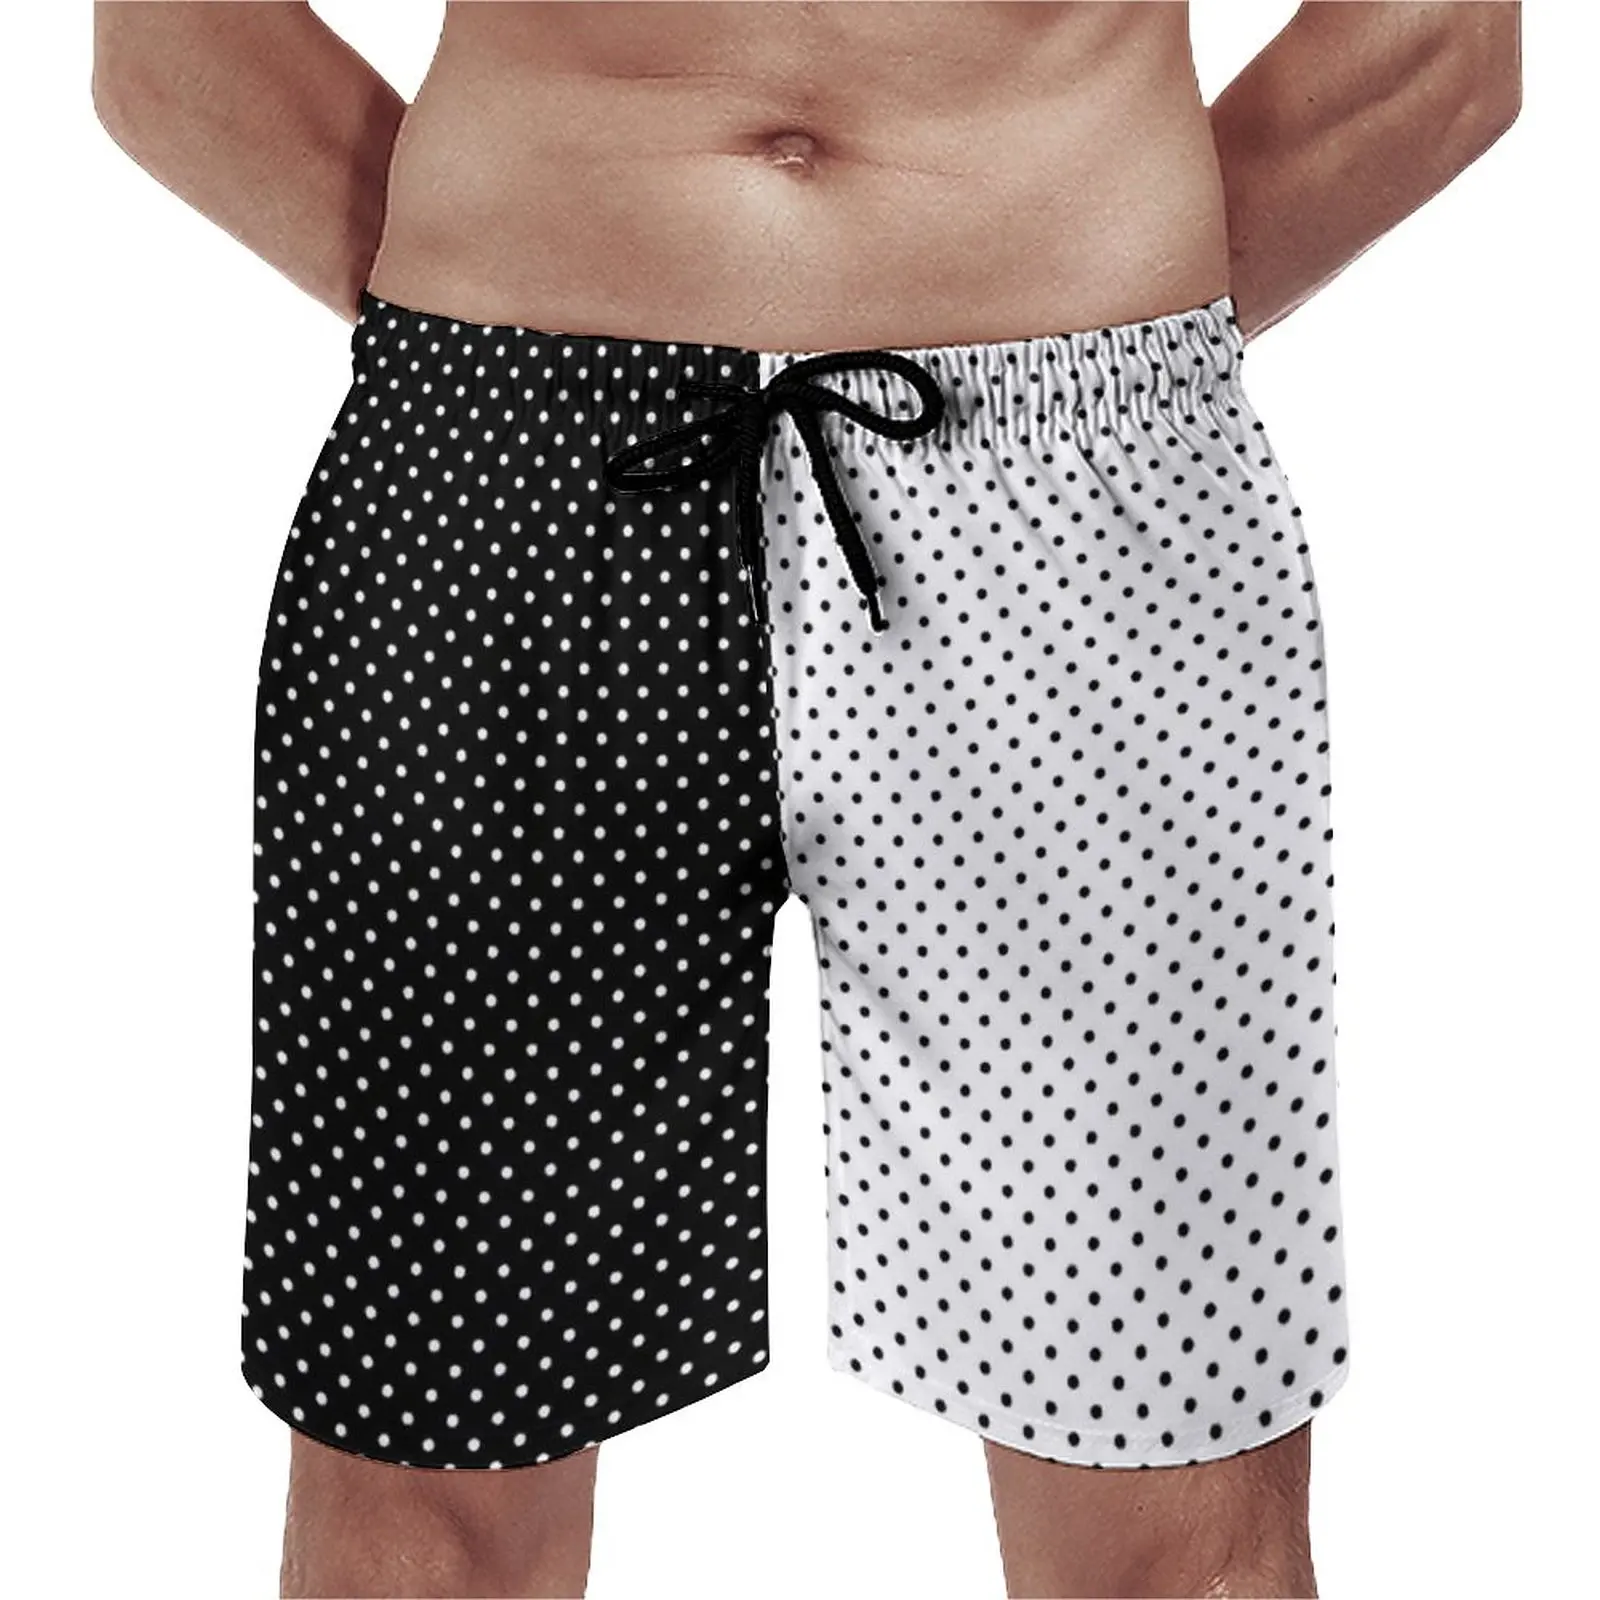 

Polka Dot Black White Board Shorts Two Tone Vintage Cute Hawaii Beach Shorts Design Sportswear Quick Drying Swimming Trunks Gift